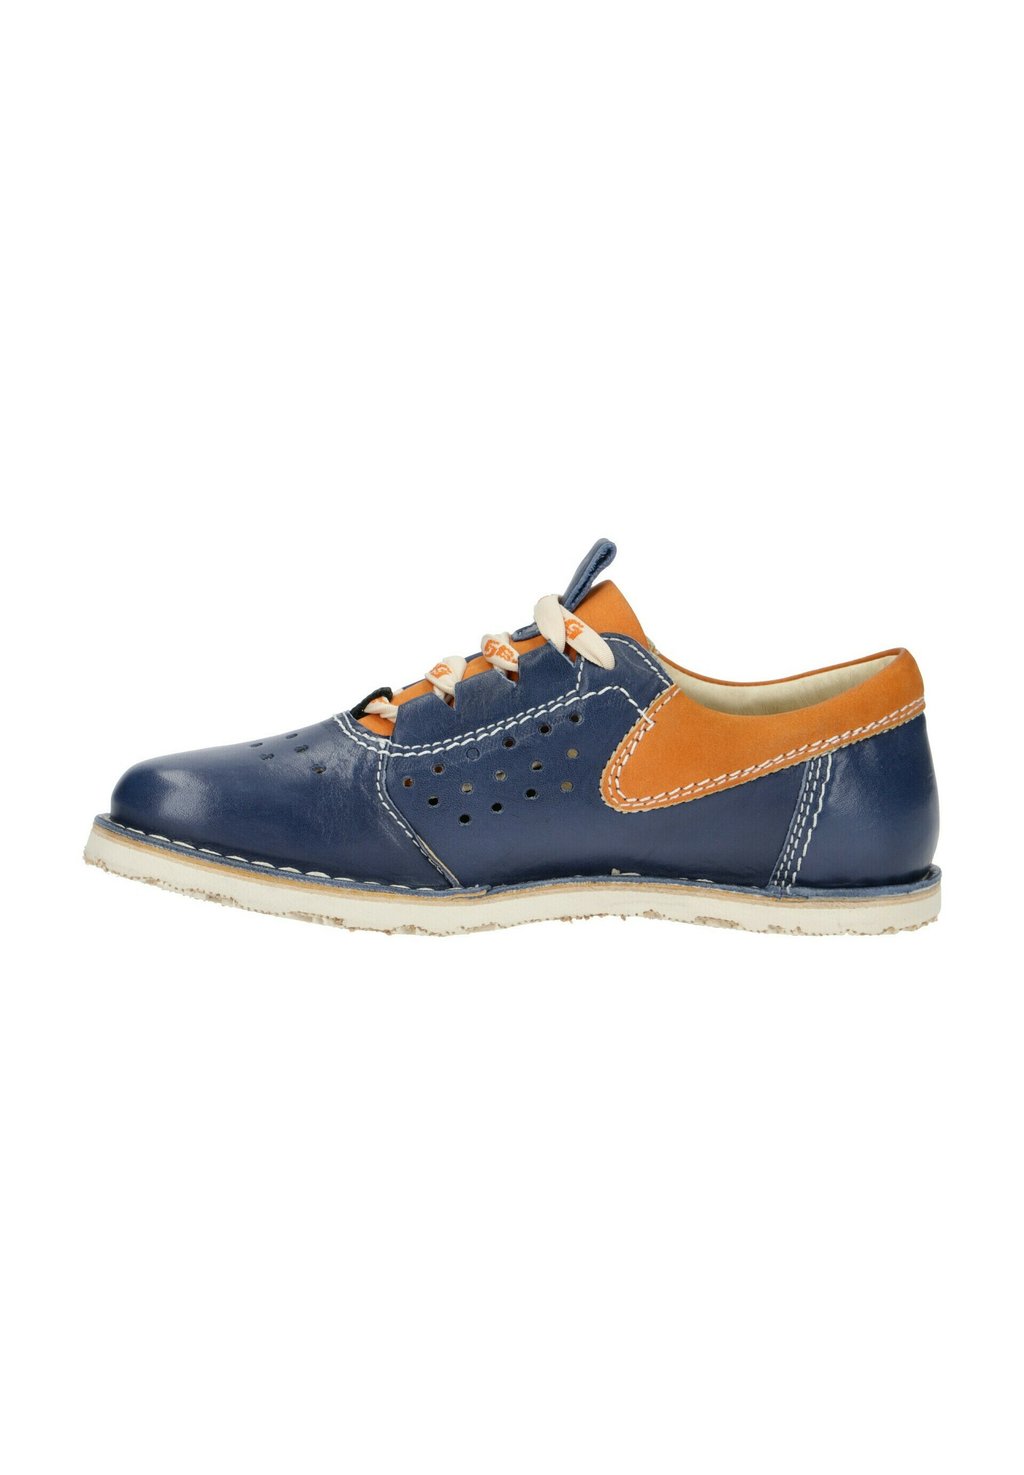 Спортивные туфли на шнуровке SONY3DEAL Eject, цвет blue / orange